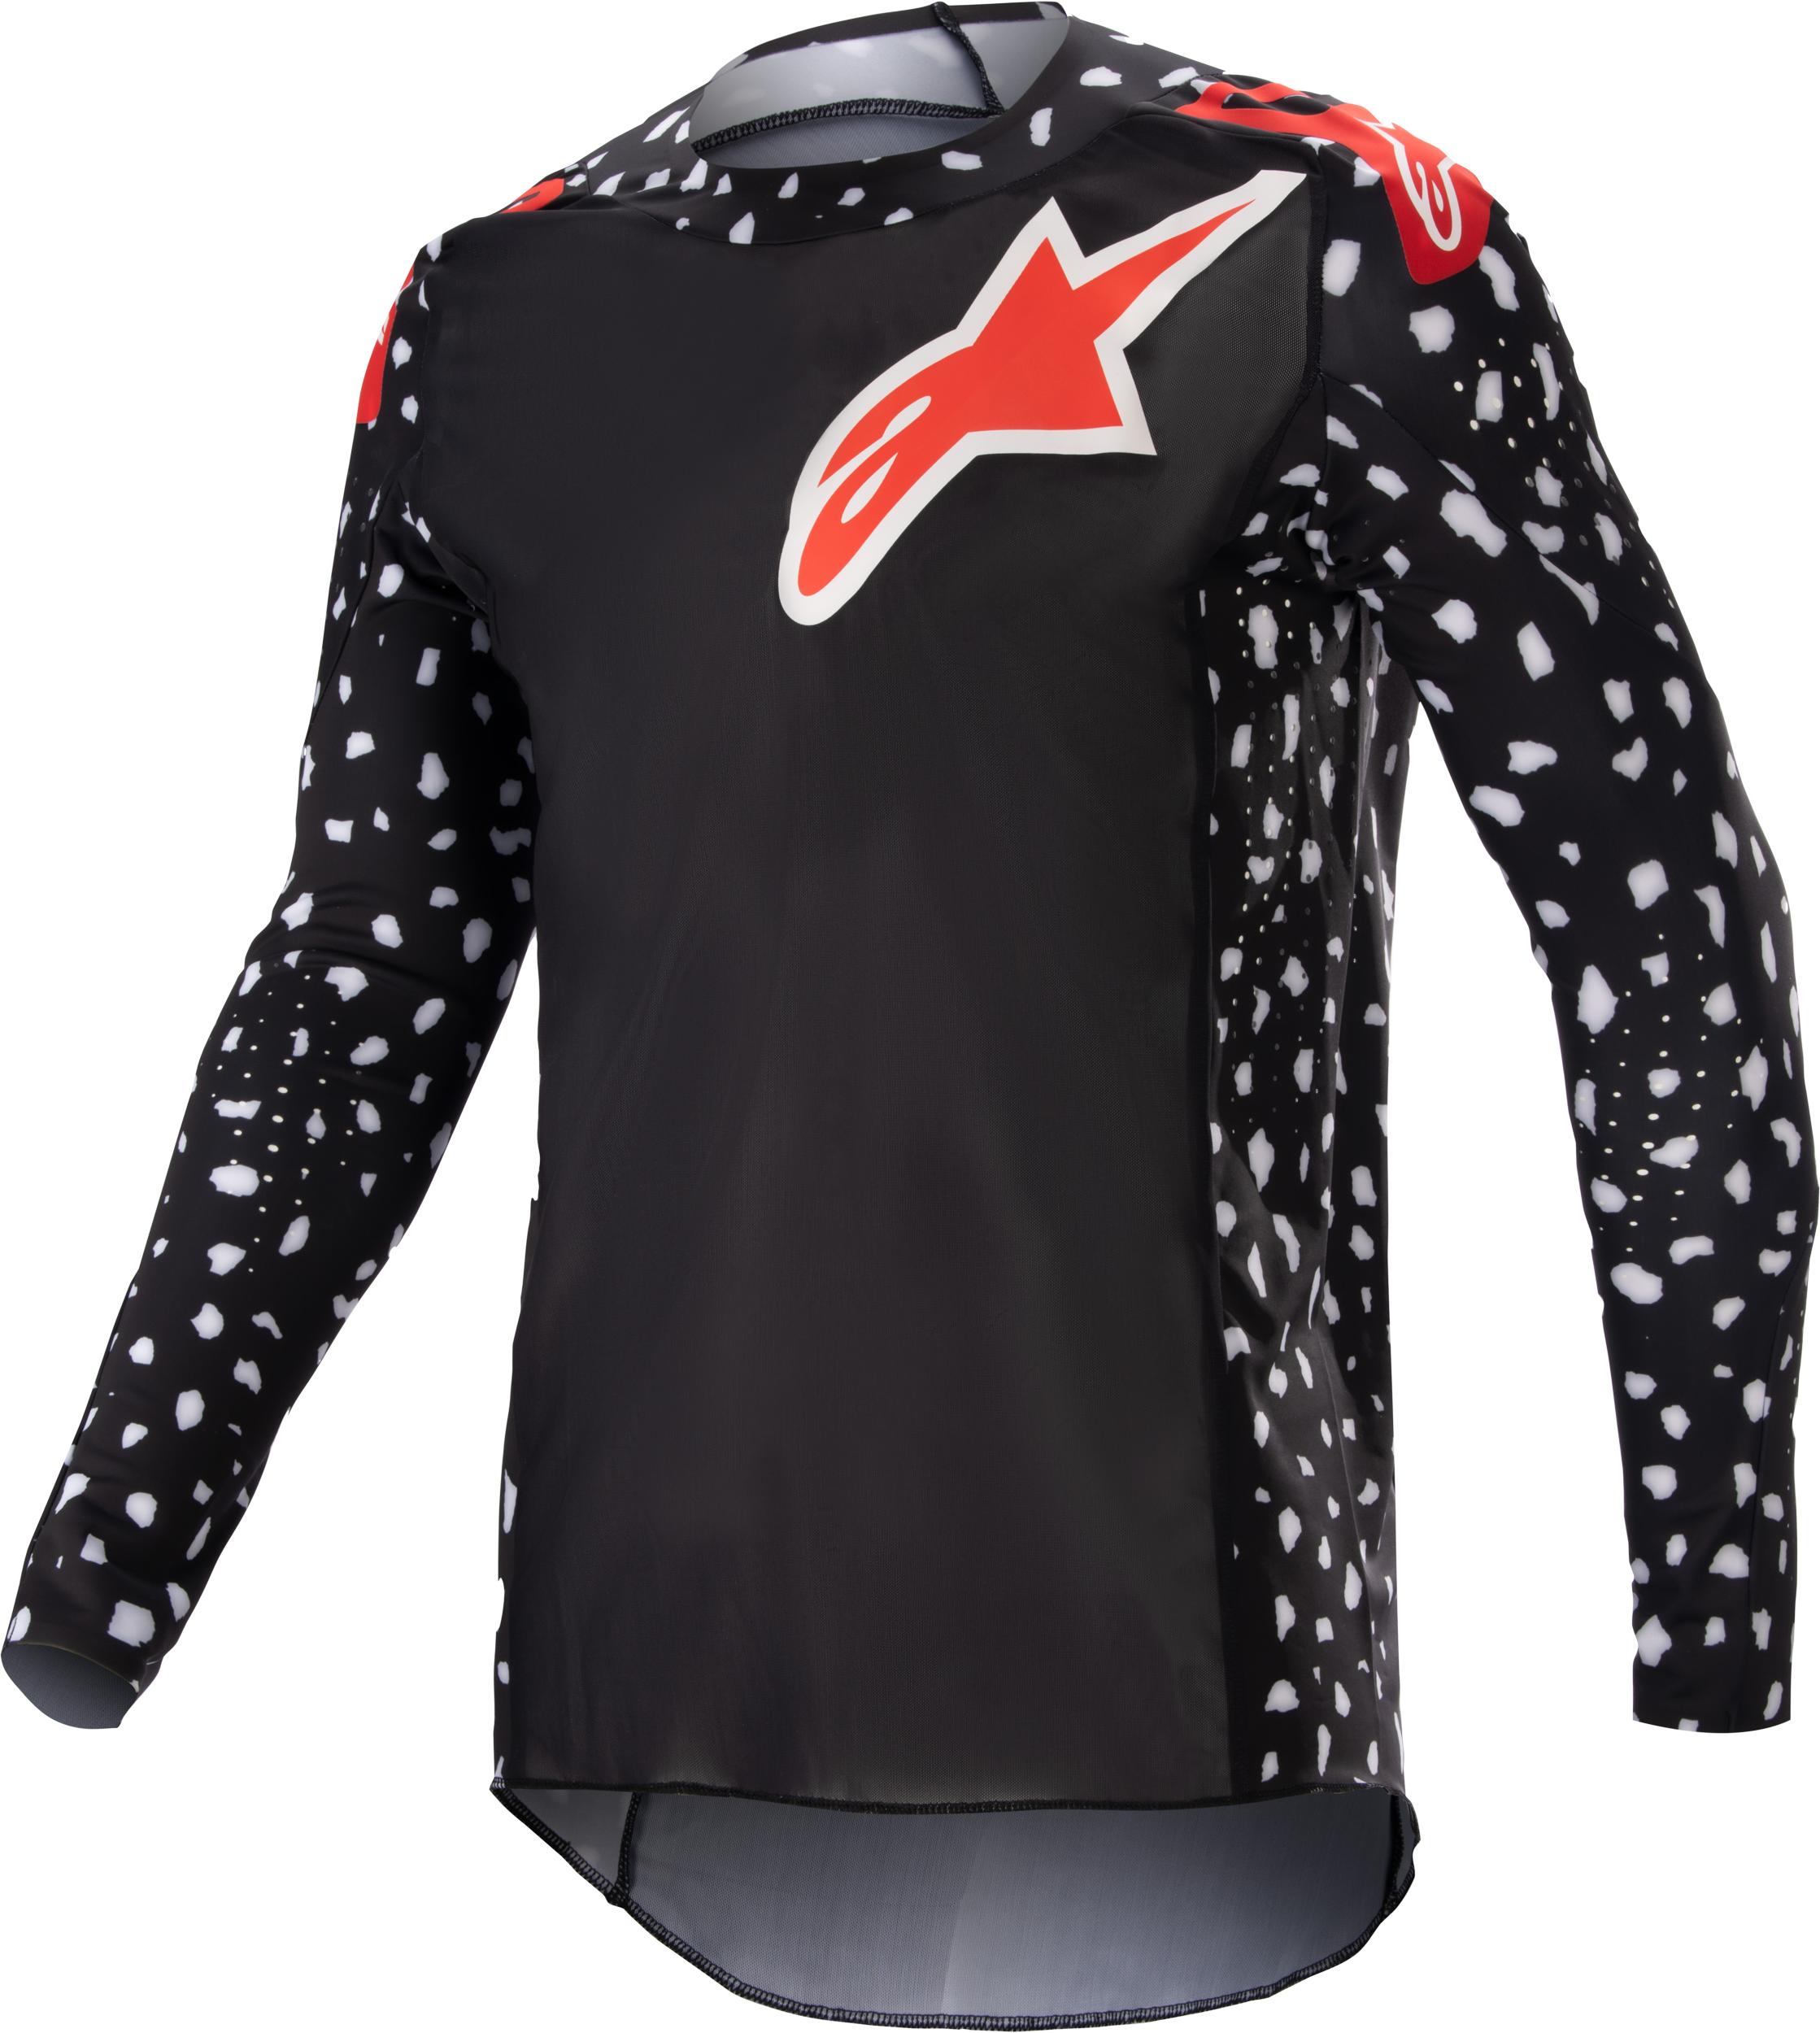 Alpinestars Supertech Jersey Black/Neon Red 2X-Large 3760523-1397-Xxl